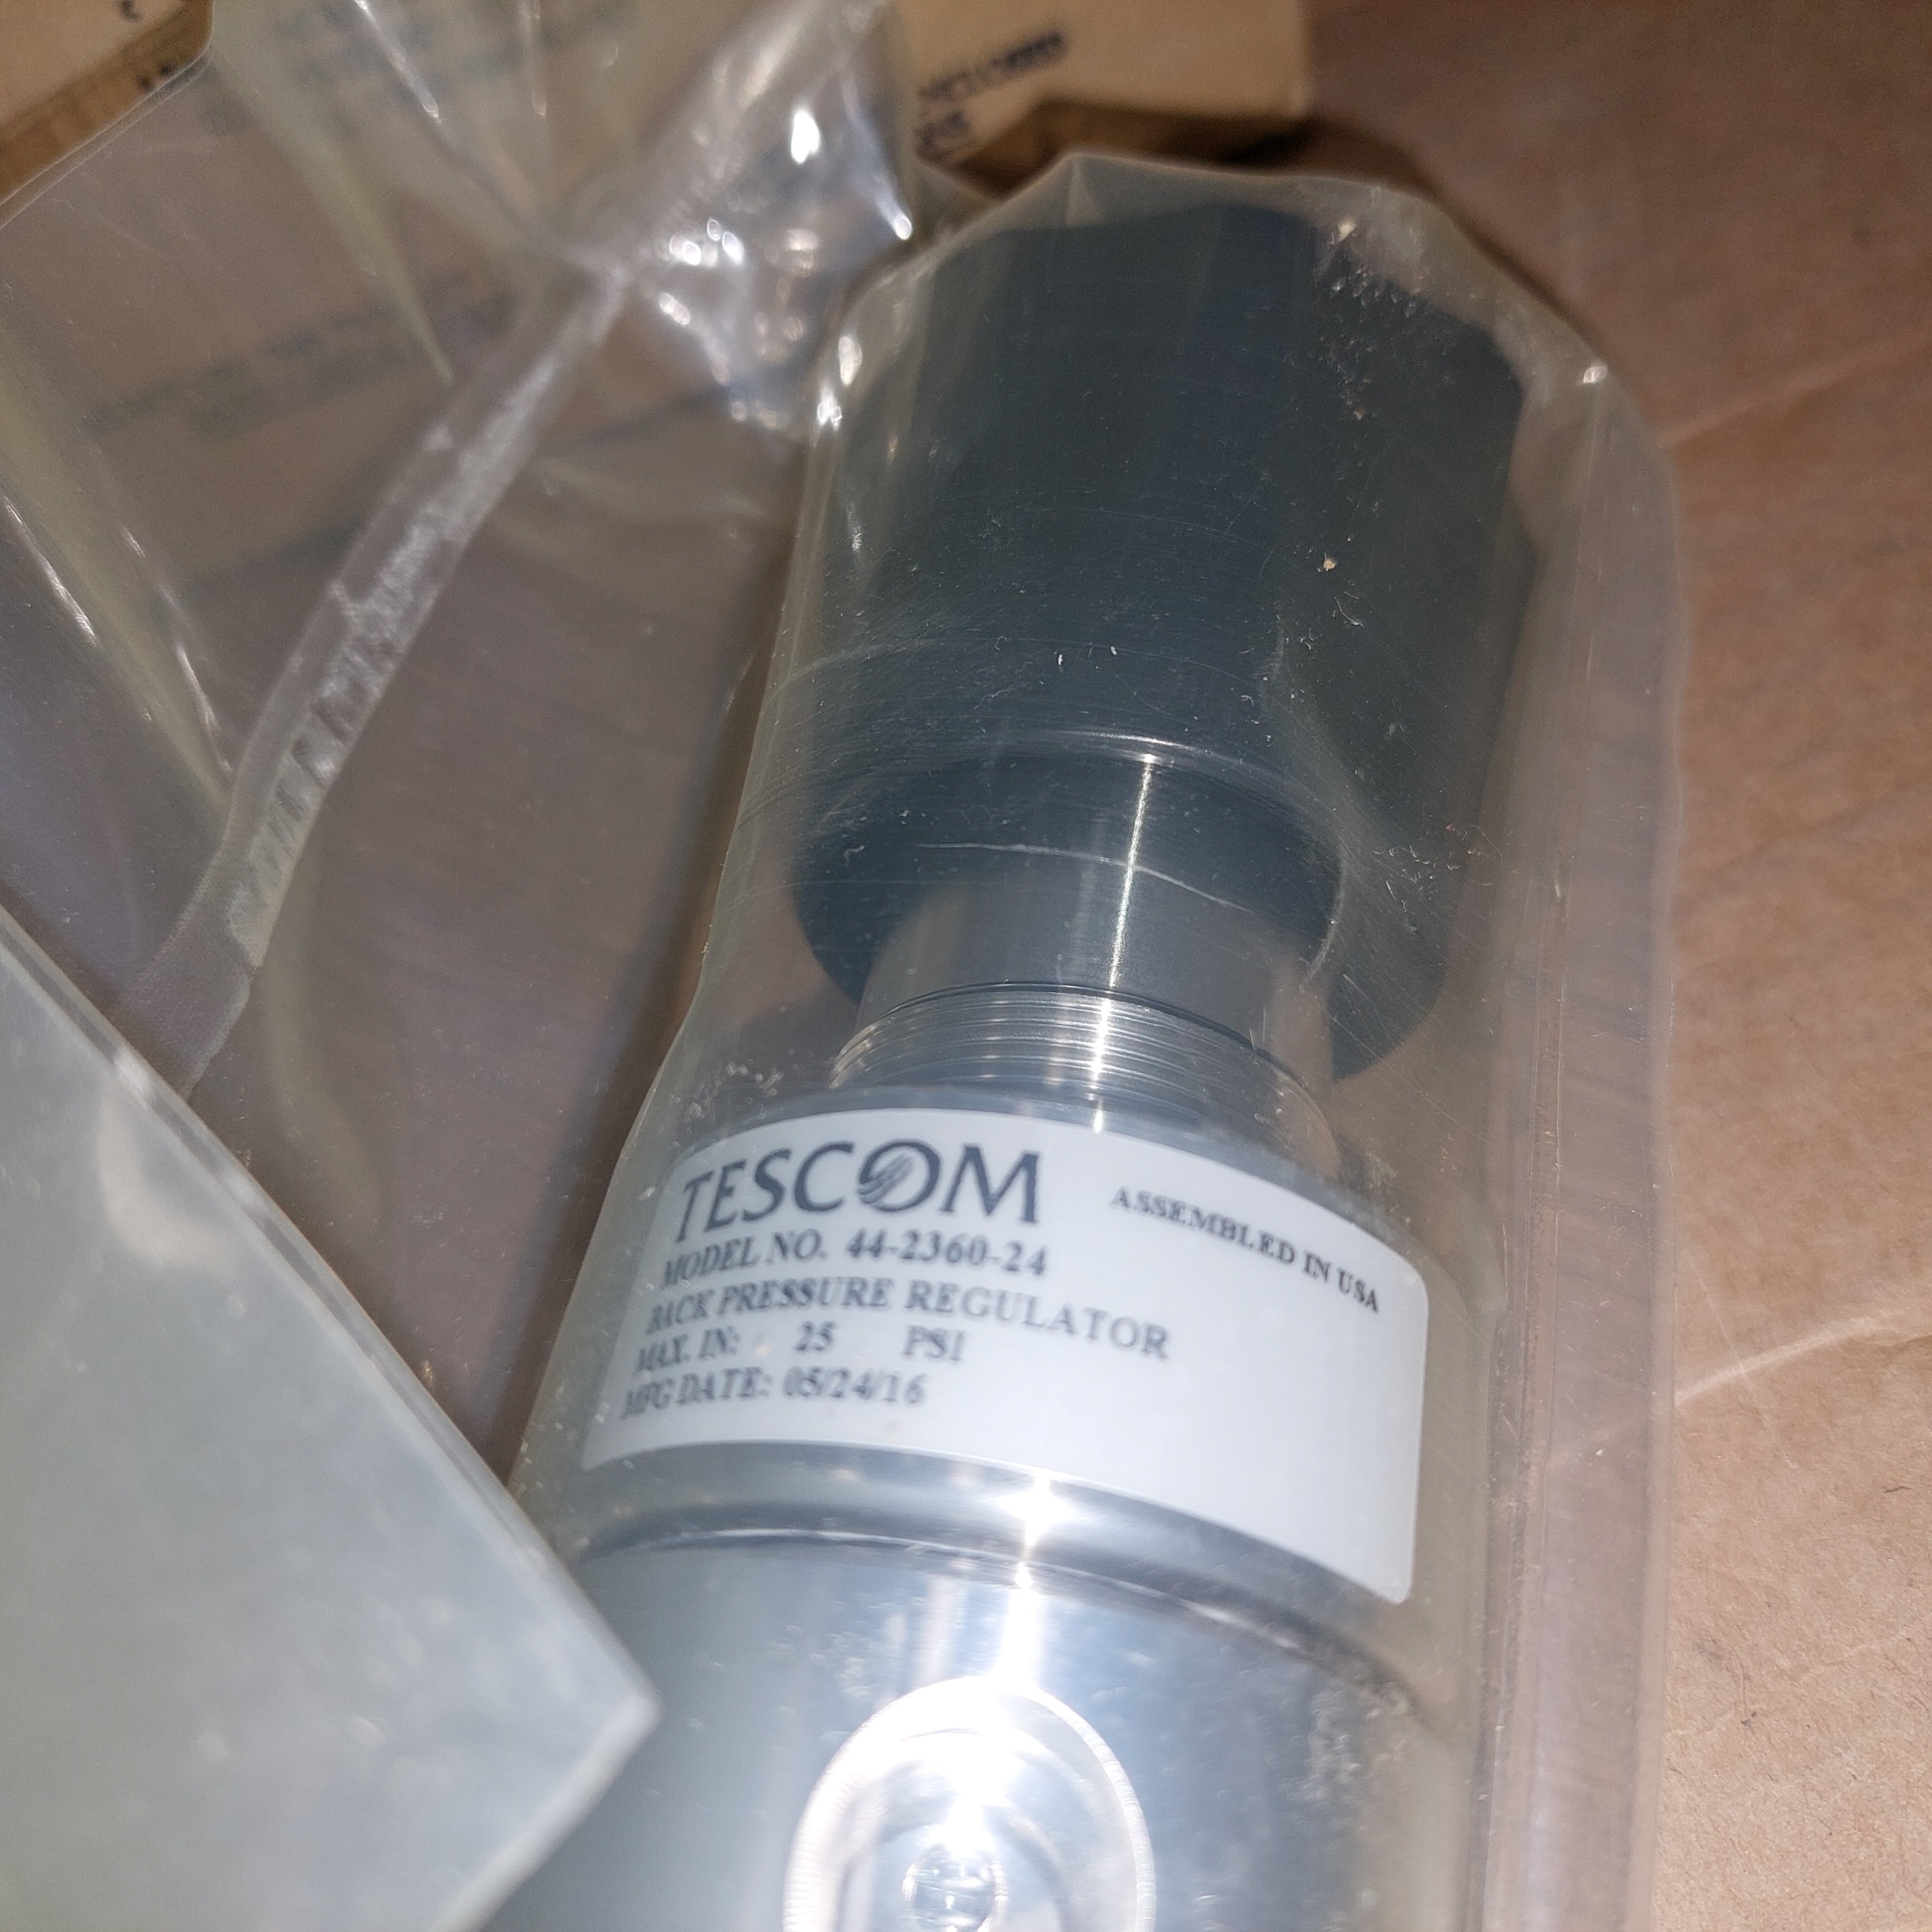 Tescom 44-2360-24 Back Pressure Pneumatic Regulator 25psi Sealed New